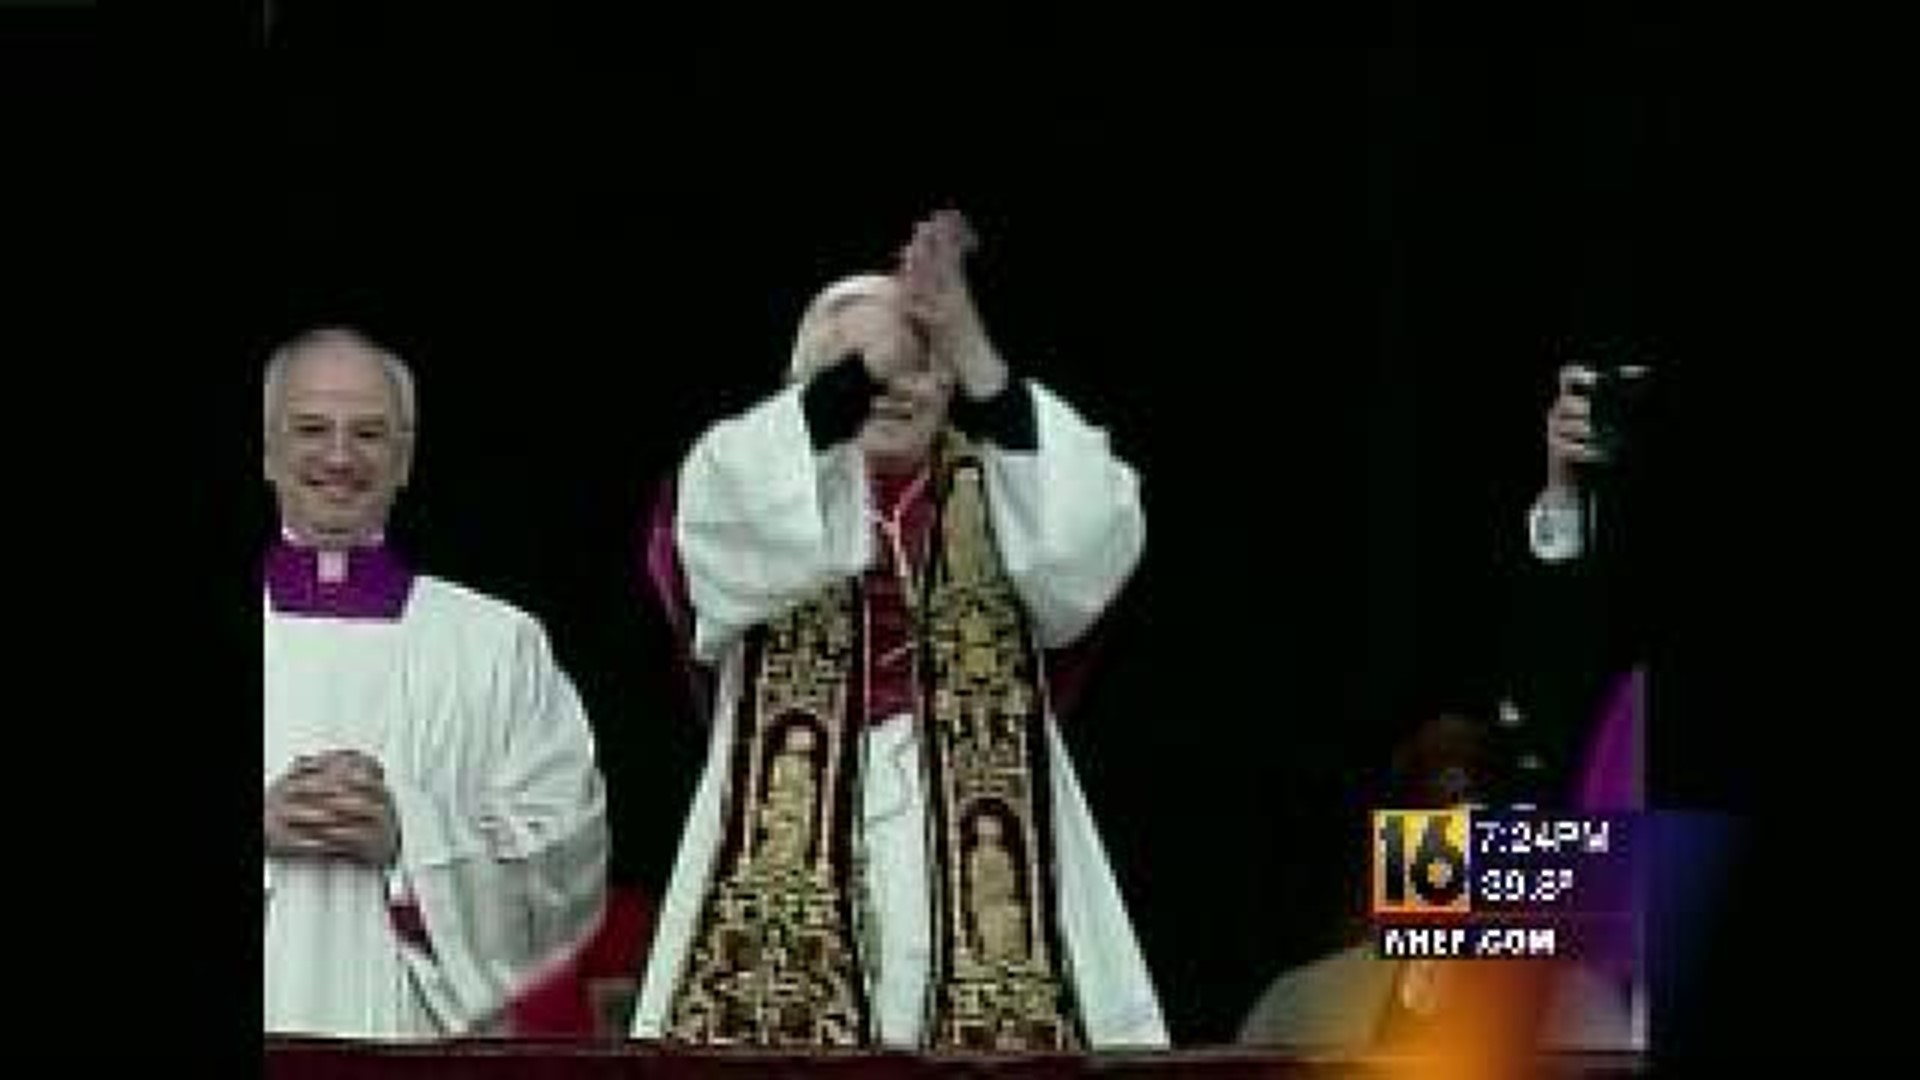 Video Vault: Cardinal Ratzinger Becomes Benedict XVI